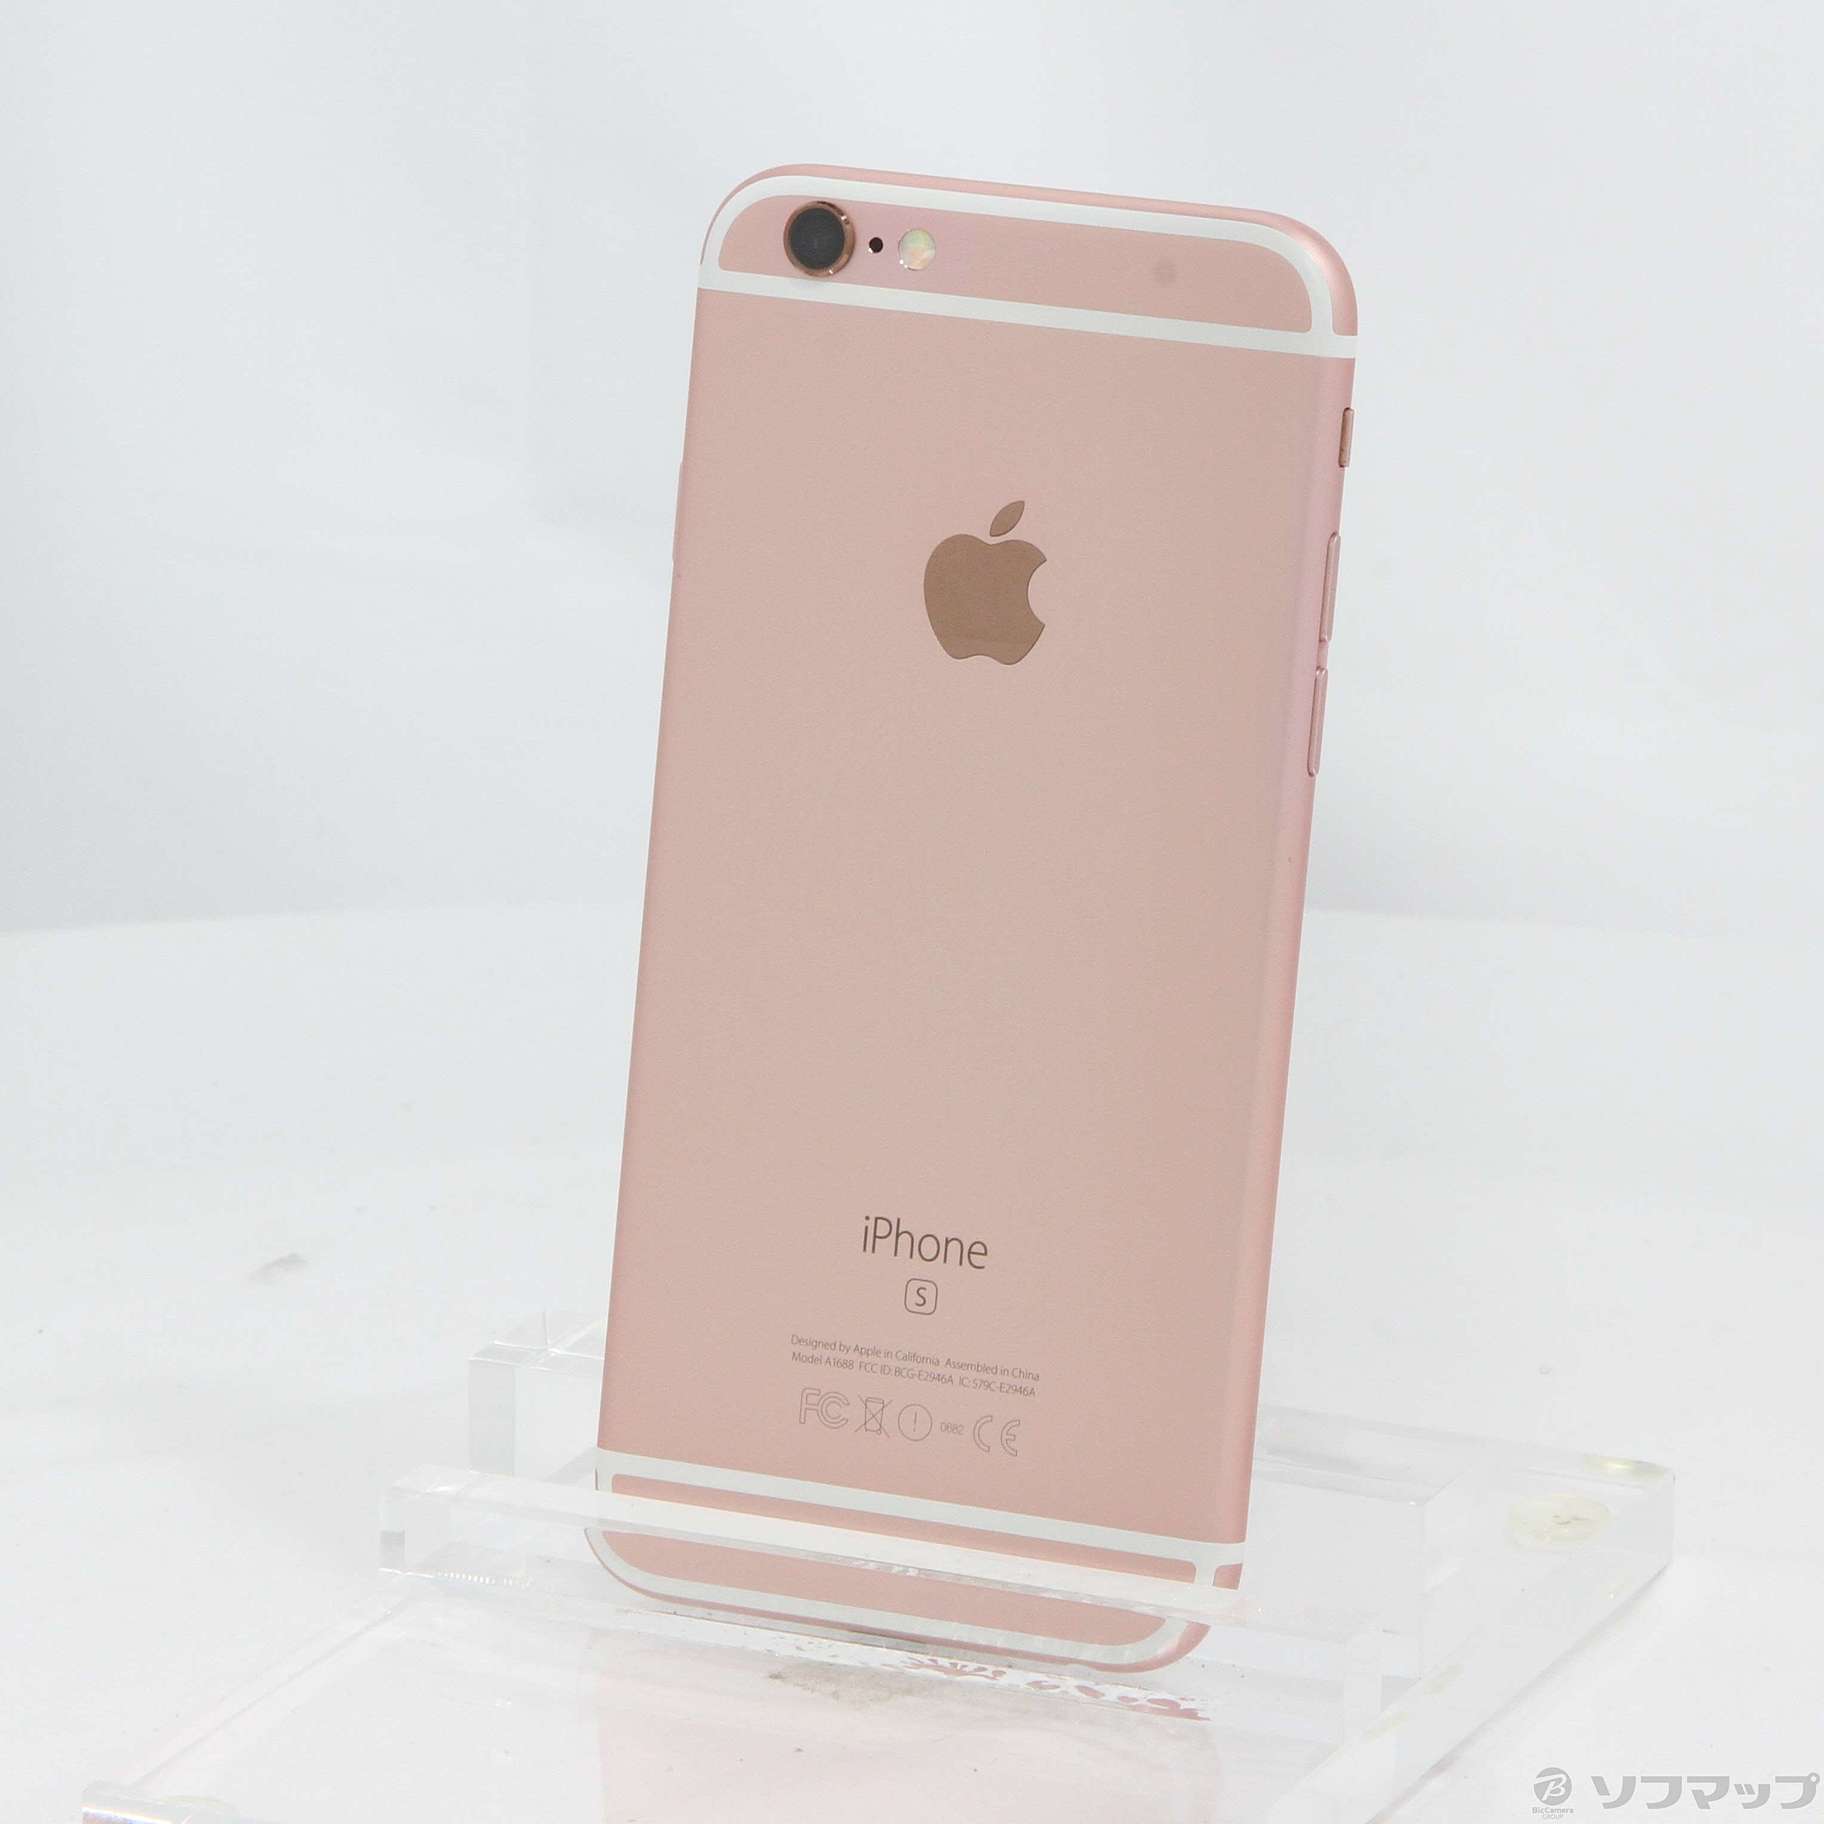 iPhone6s ローズゴールド 64GB SIMフリースマートフォン本体 